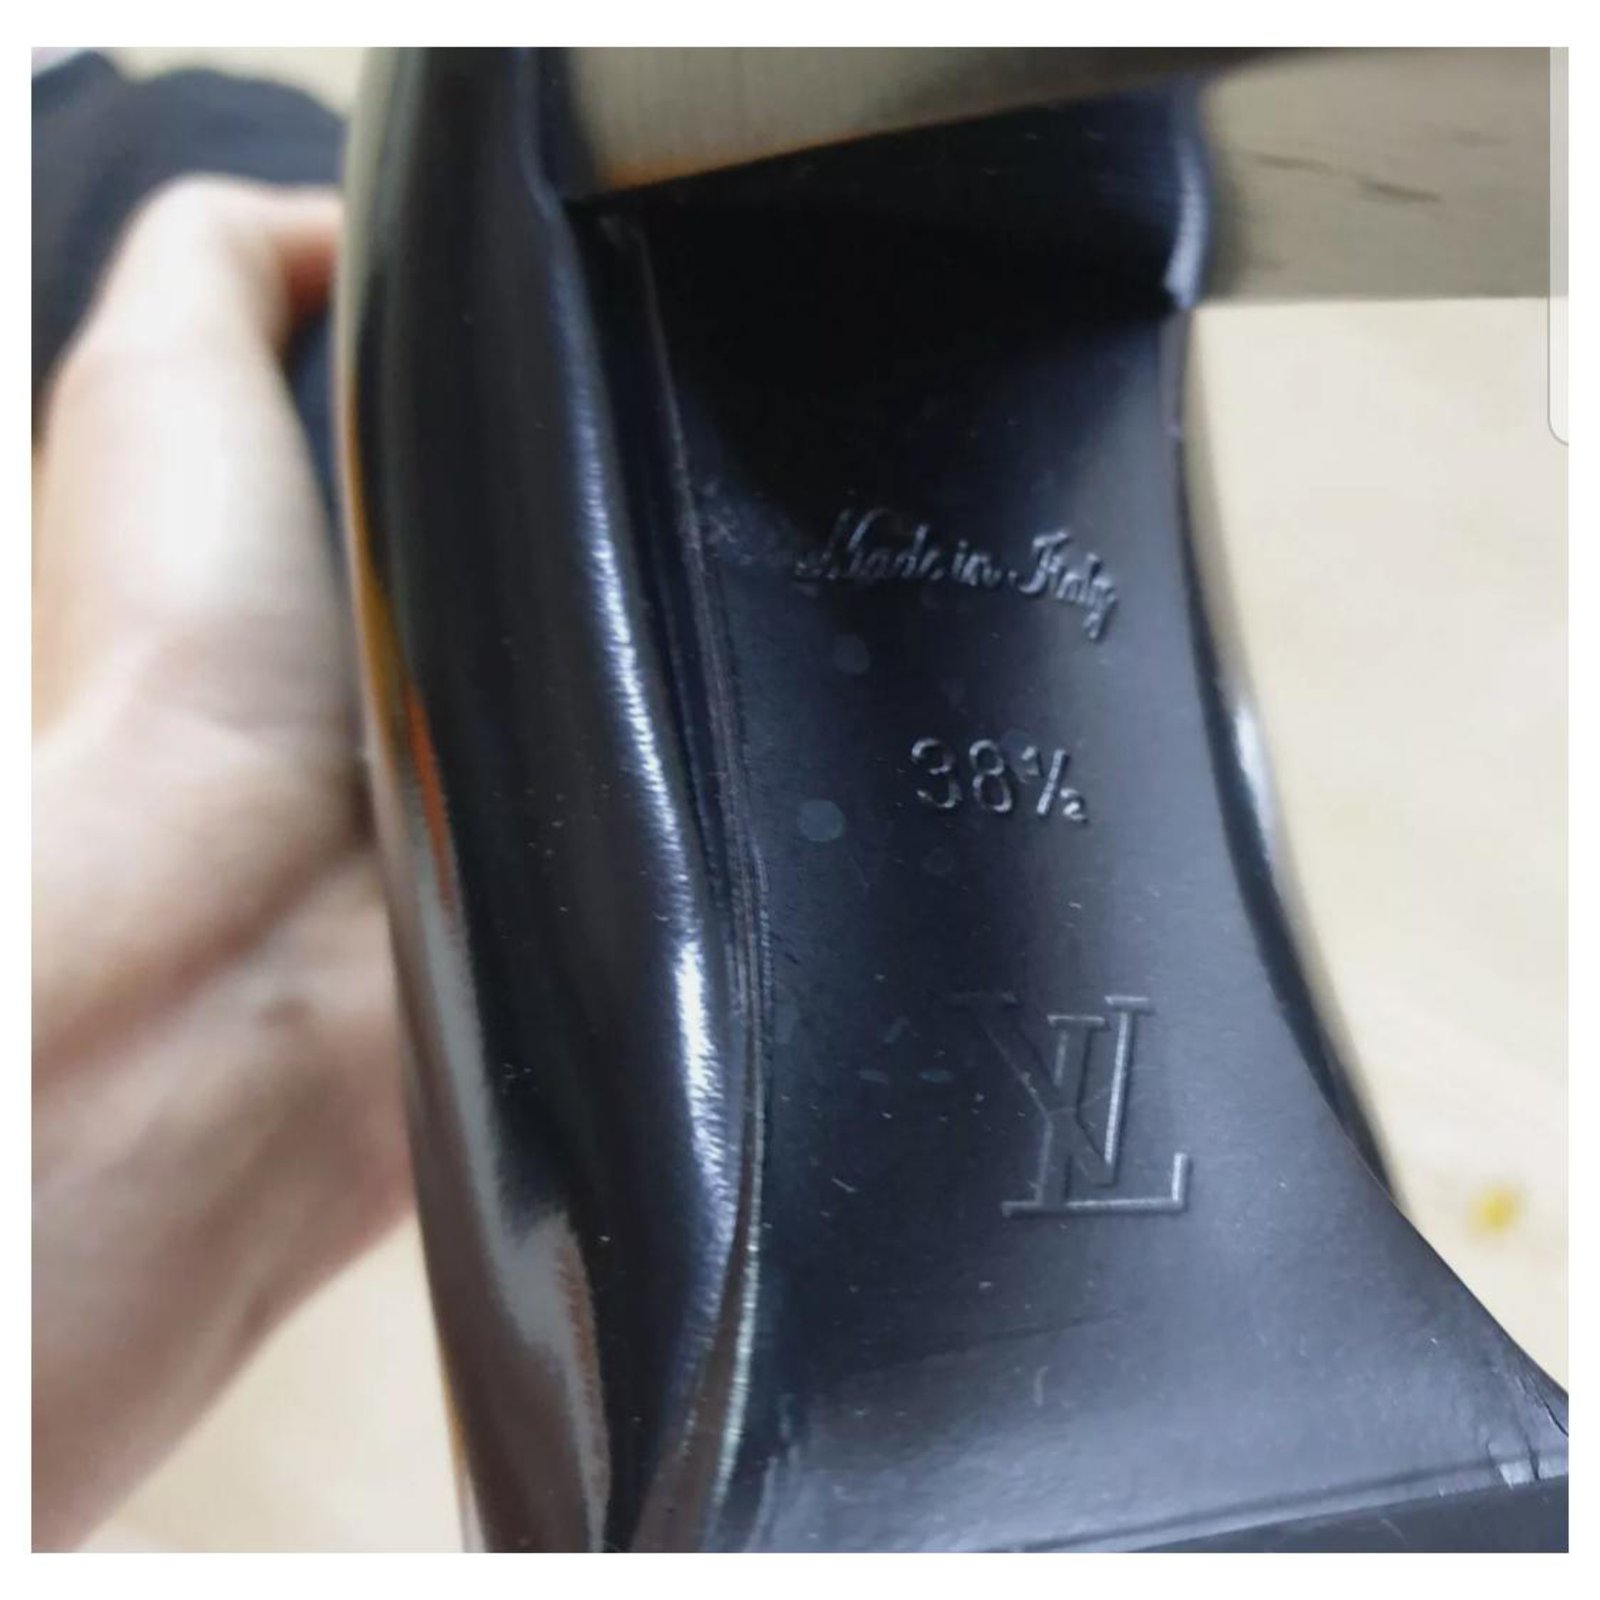 Louis Vuitton Patent Leather Knit Over Knee Boots Sz. 38,5 Black